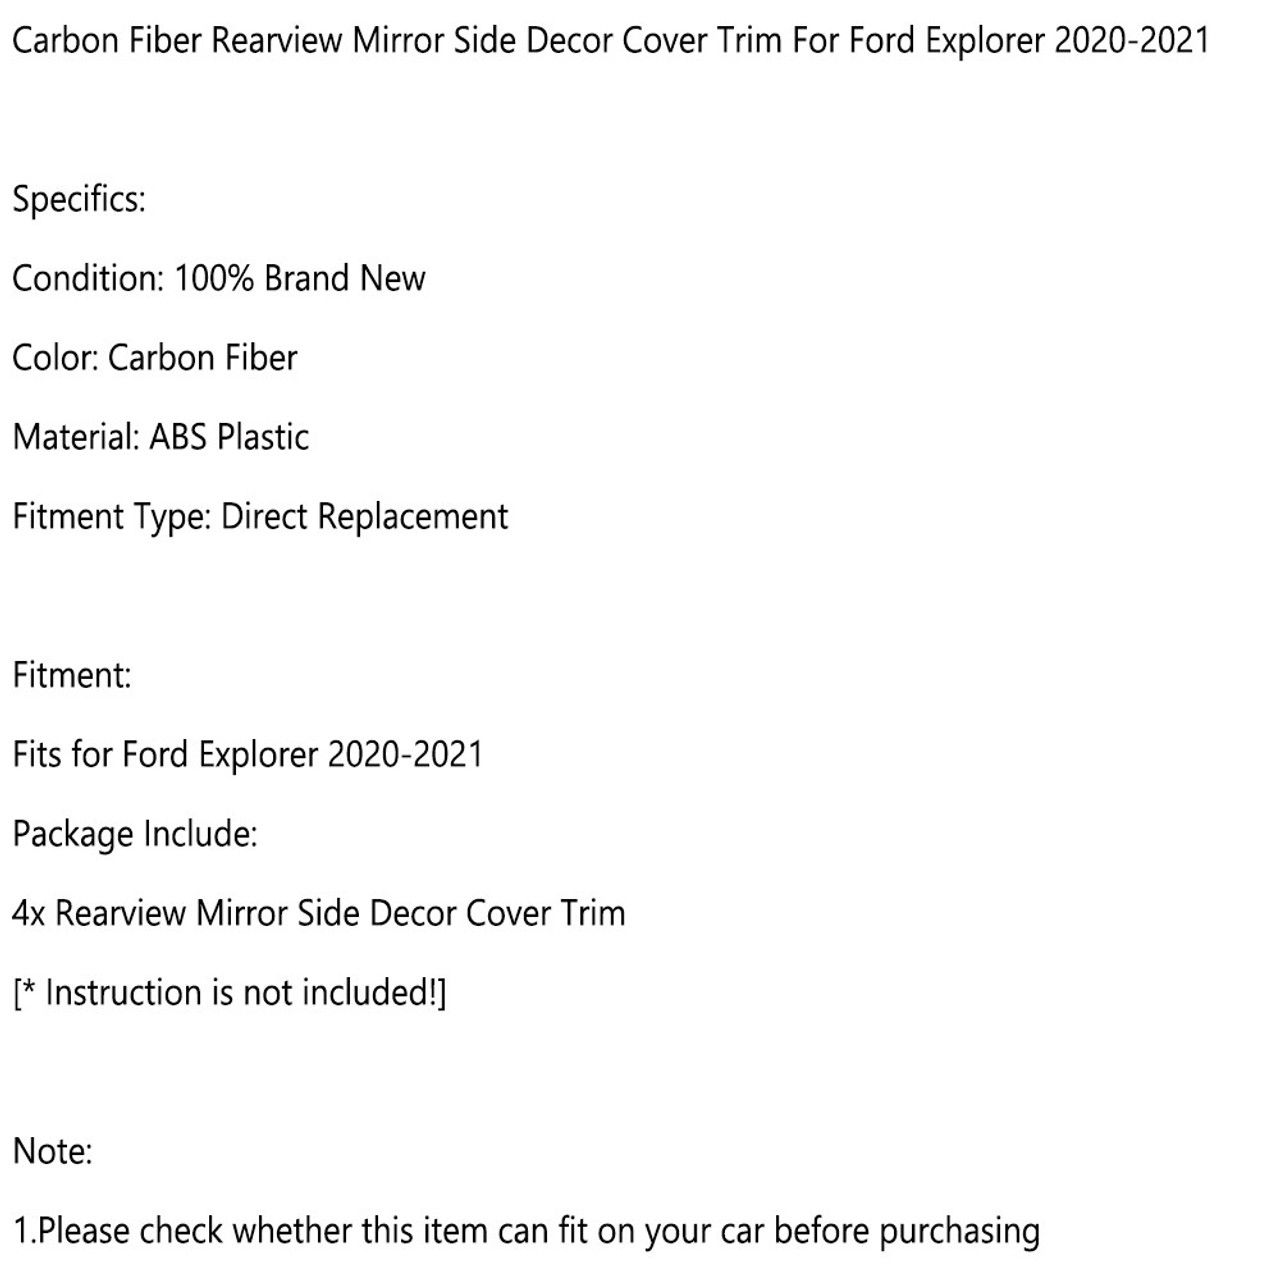 Rearview Mirror Side Decor Cover Trim Fit for Ford Explorer 20-21 Carbon Fiber